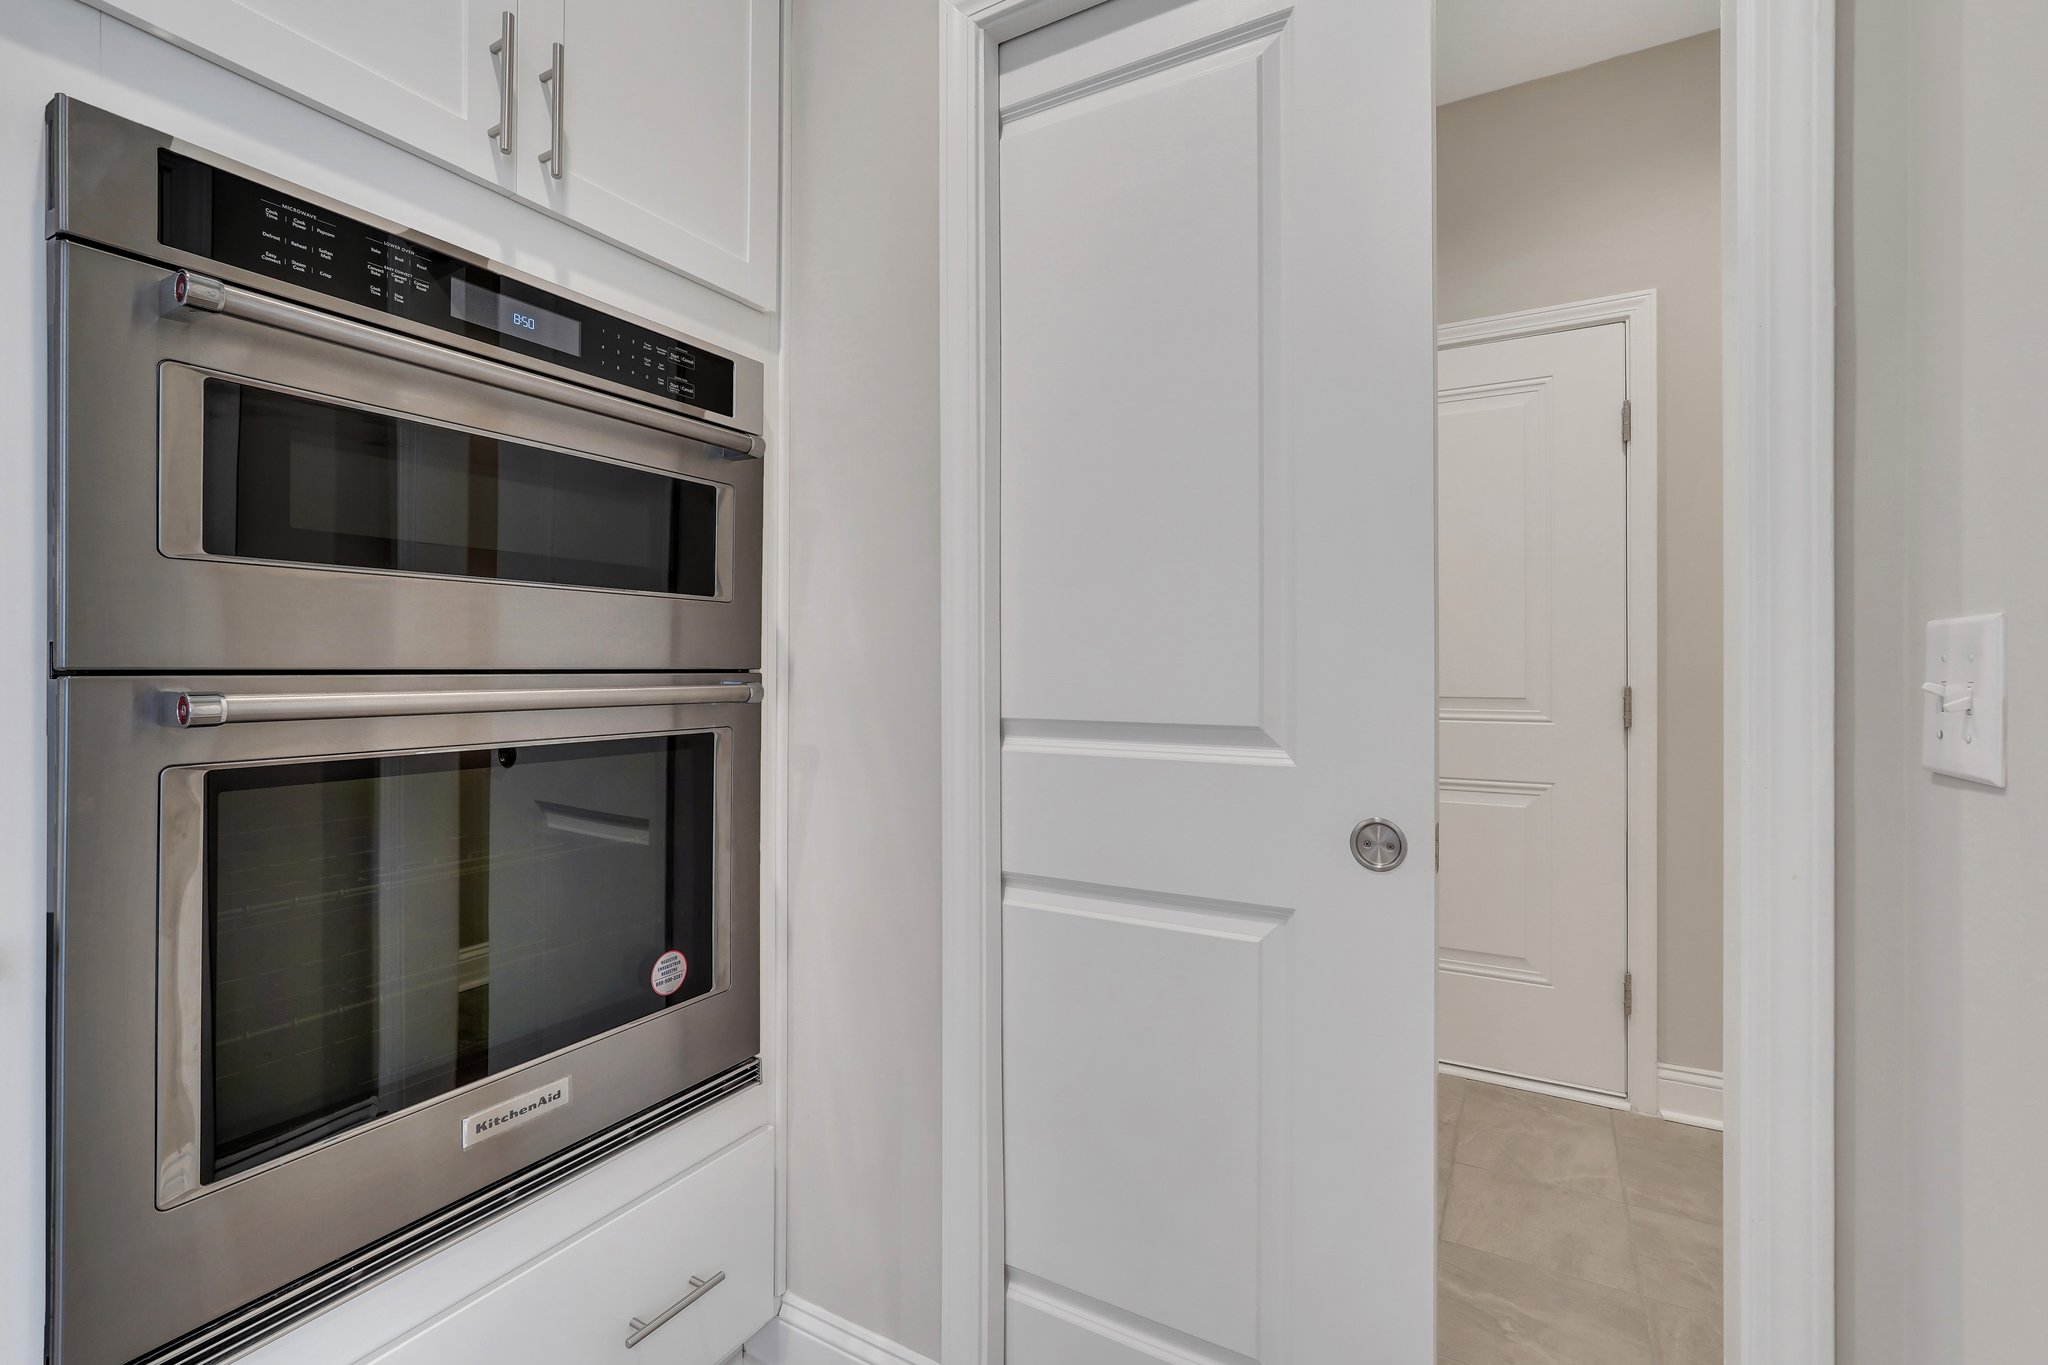 KitchenAid Convection Oven & Microwave.  Pocket door between kitchen & laundry room.